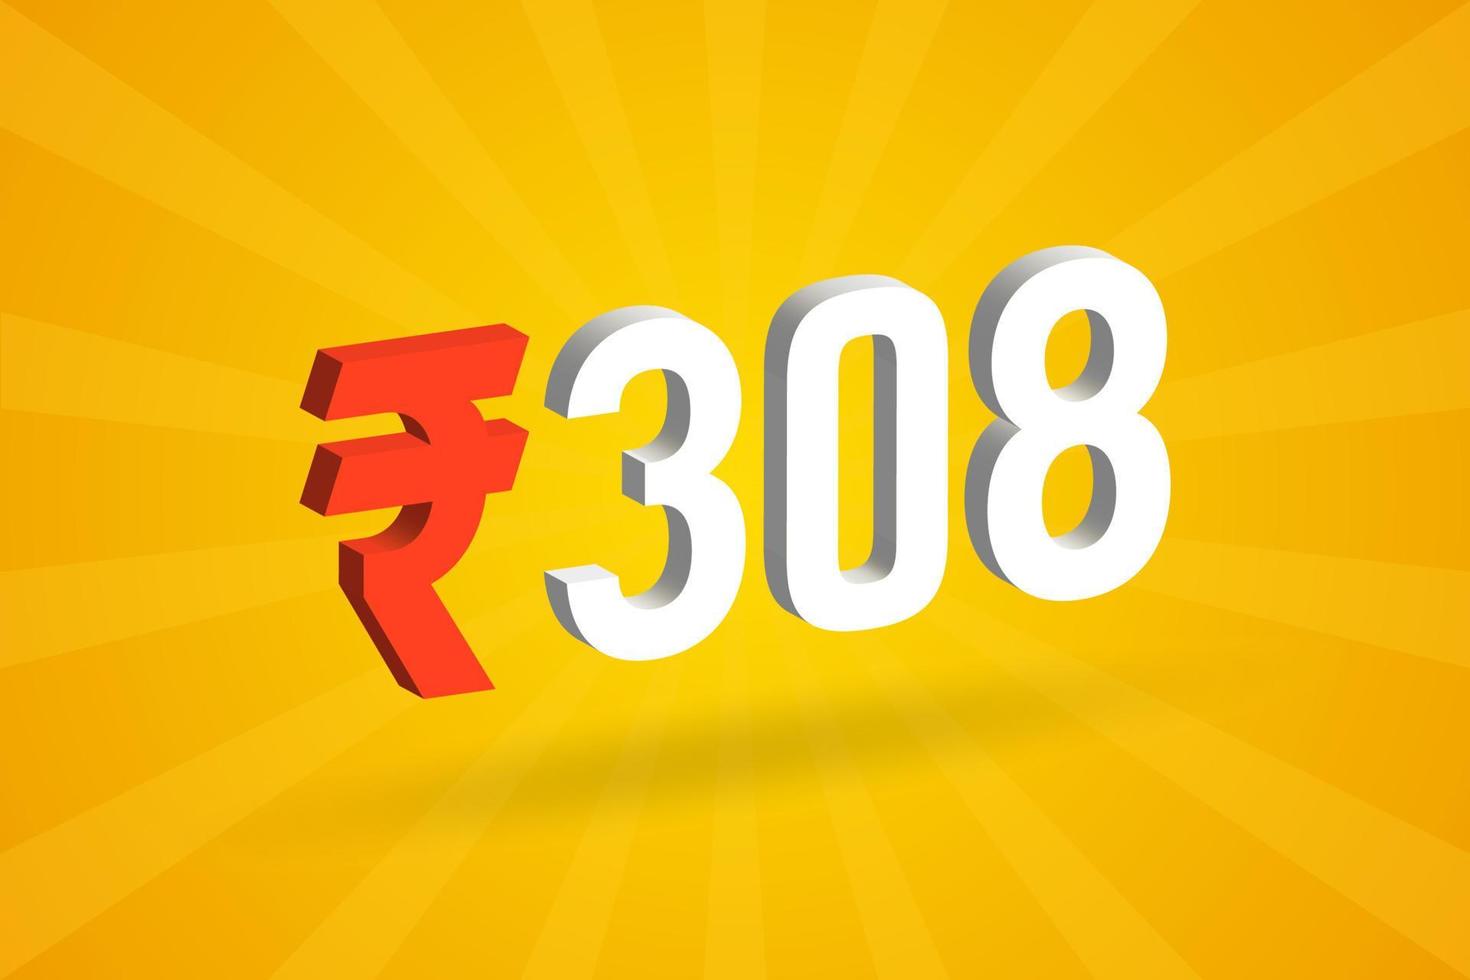 308 rupias símbolo 3d imagen vectorial de texto en negrita. 3d 308 rupia india signo de moneda ilustración vectorial vector